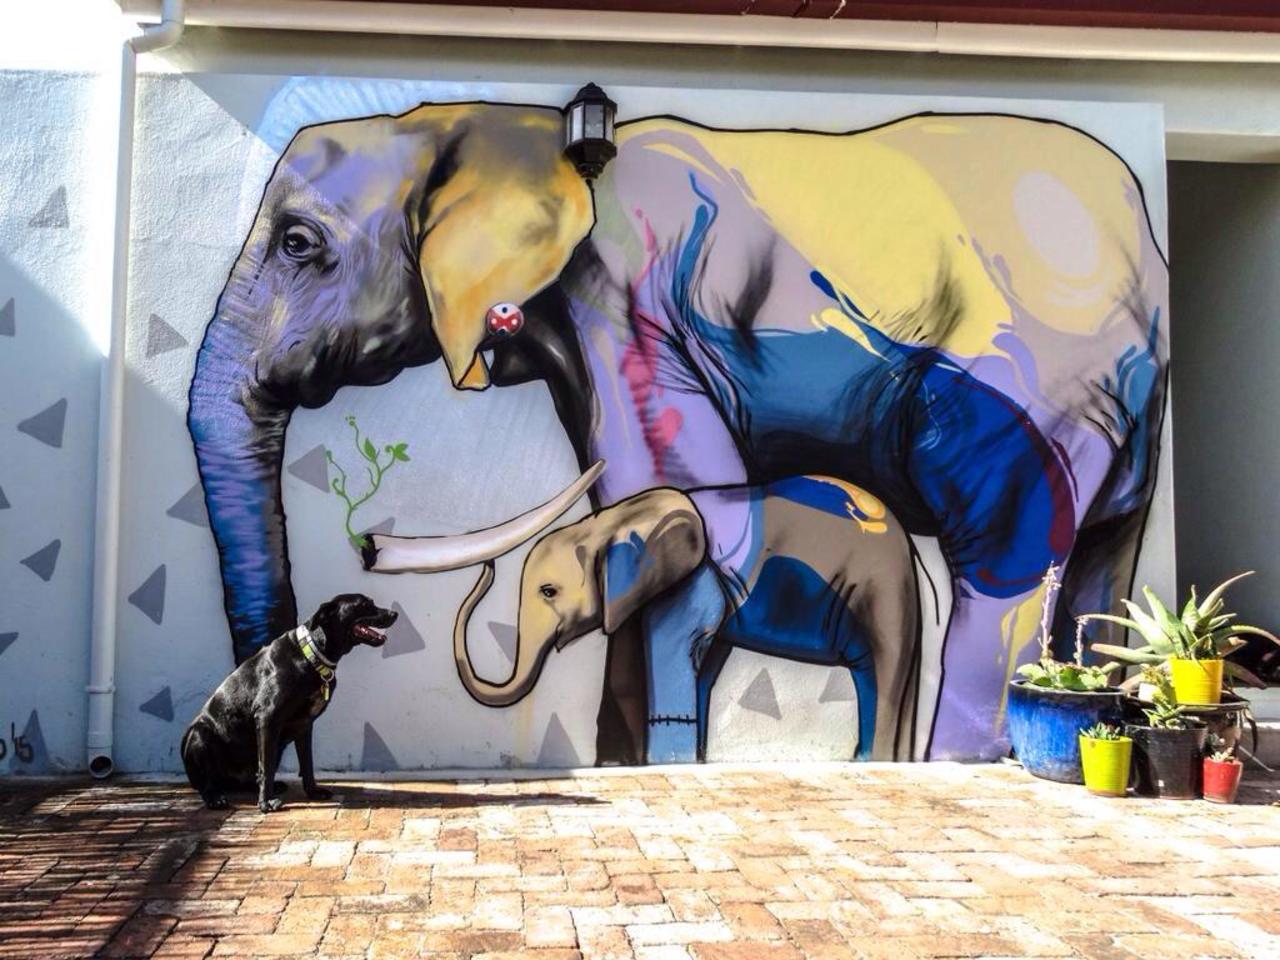 Latest nature in Street Art piece by Falko Paints In Cape Town

#art #mural #graffiti #streetart http://t.co/qnwYiWXXfU